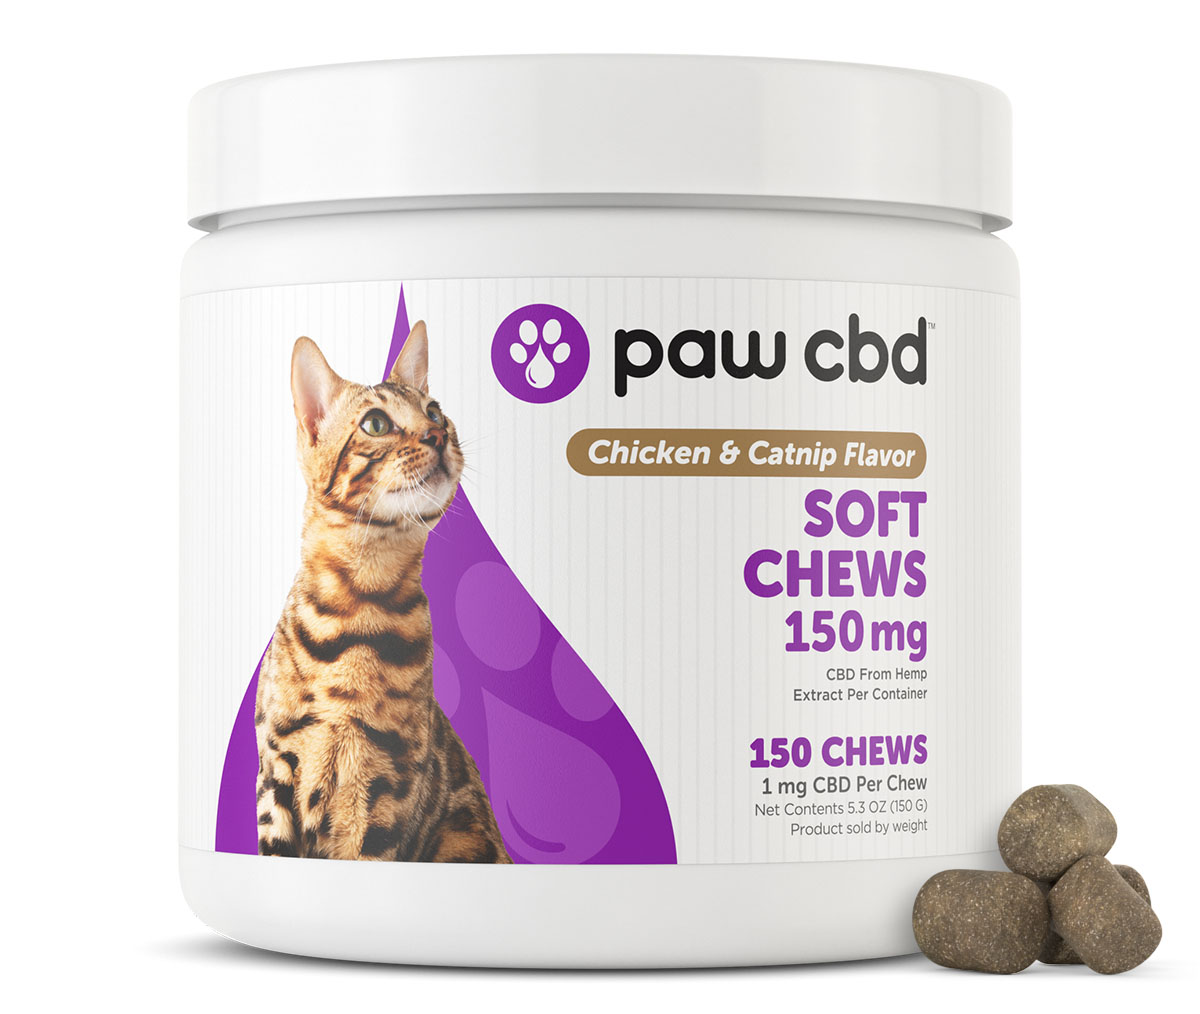 Paw CBD's CBD cat treats